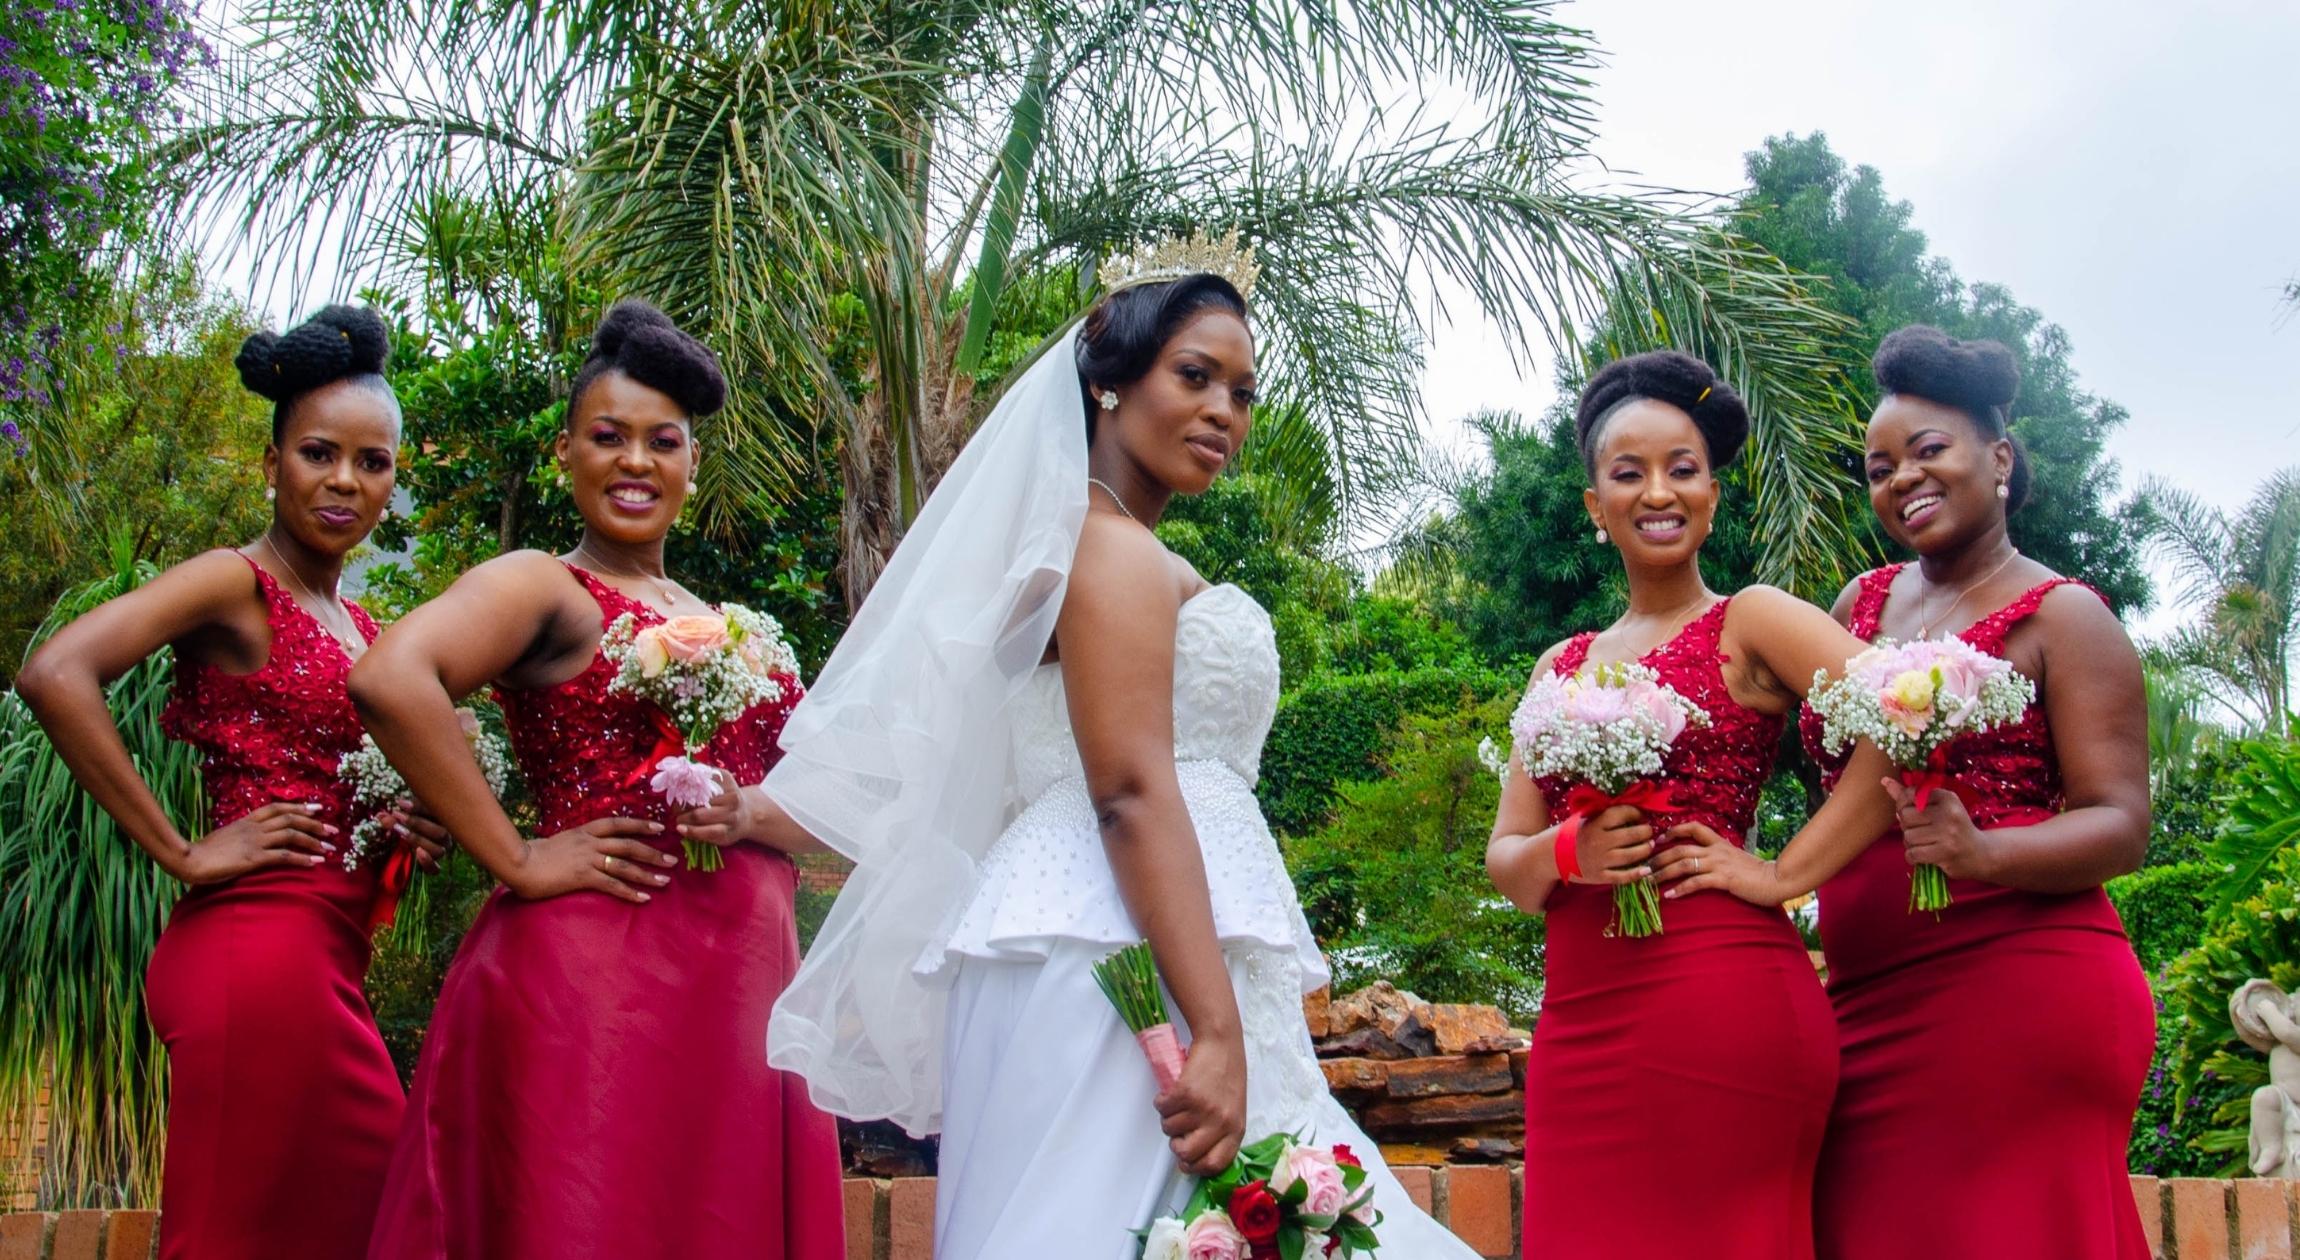 Four Black bridesmaids in red dresses surrounding a Black bride